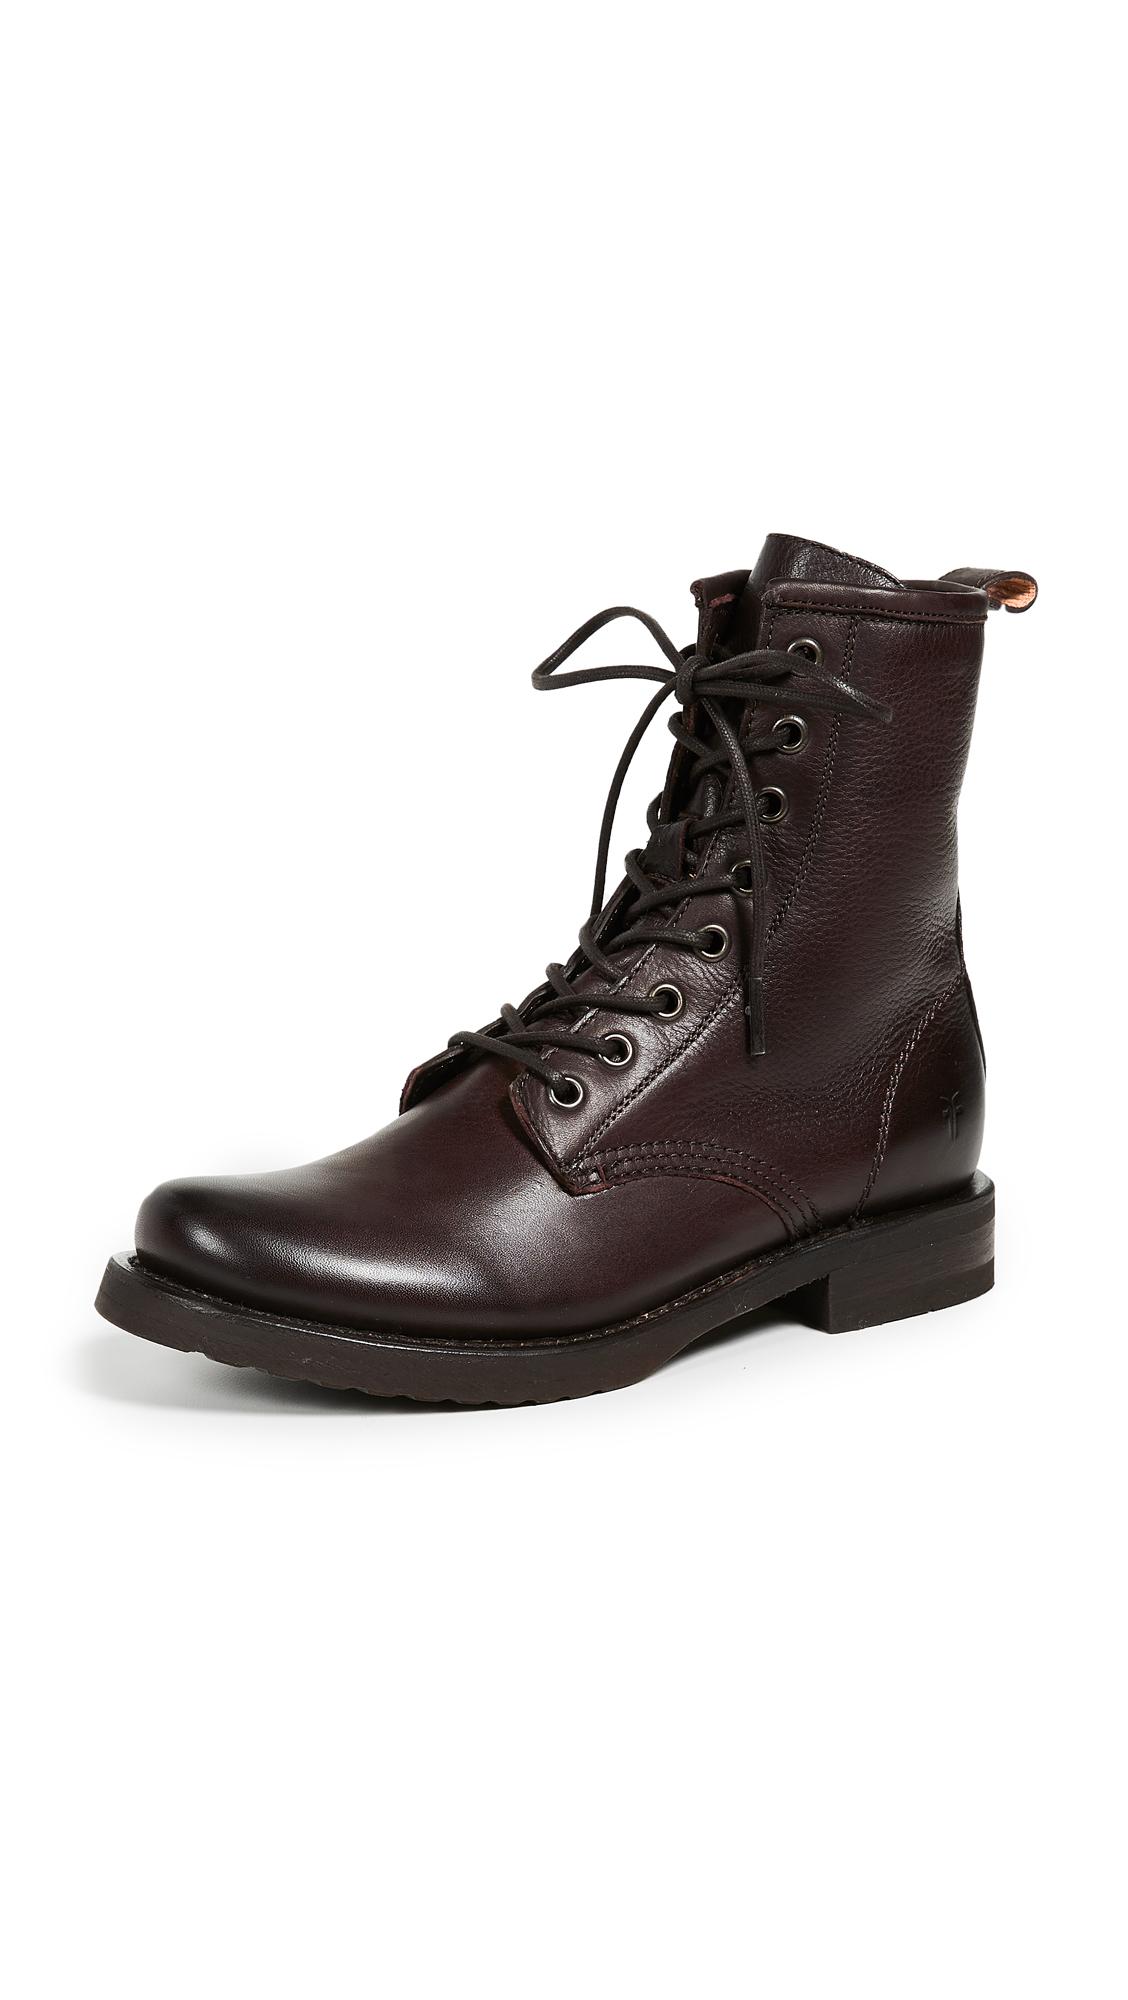 Frye Leather Veronica Combat Boots in Dark Brown (Brown) - Lyst